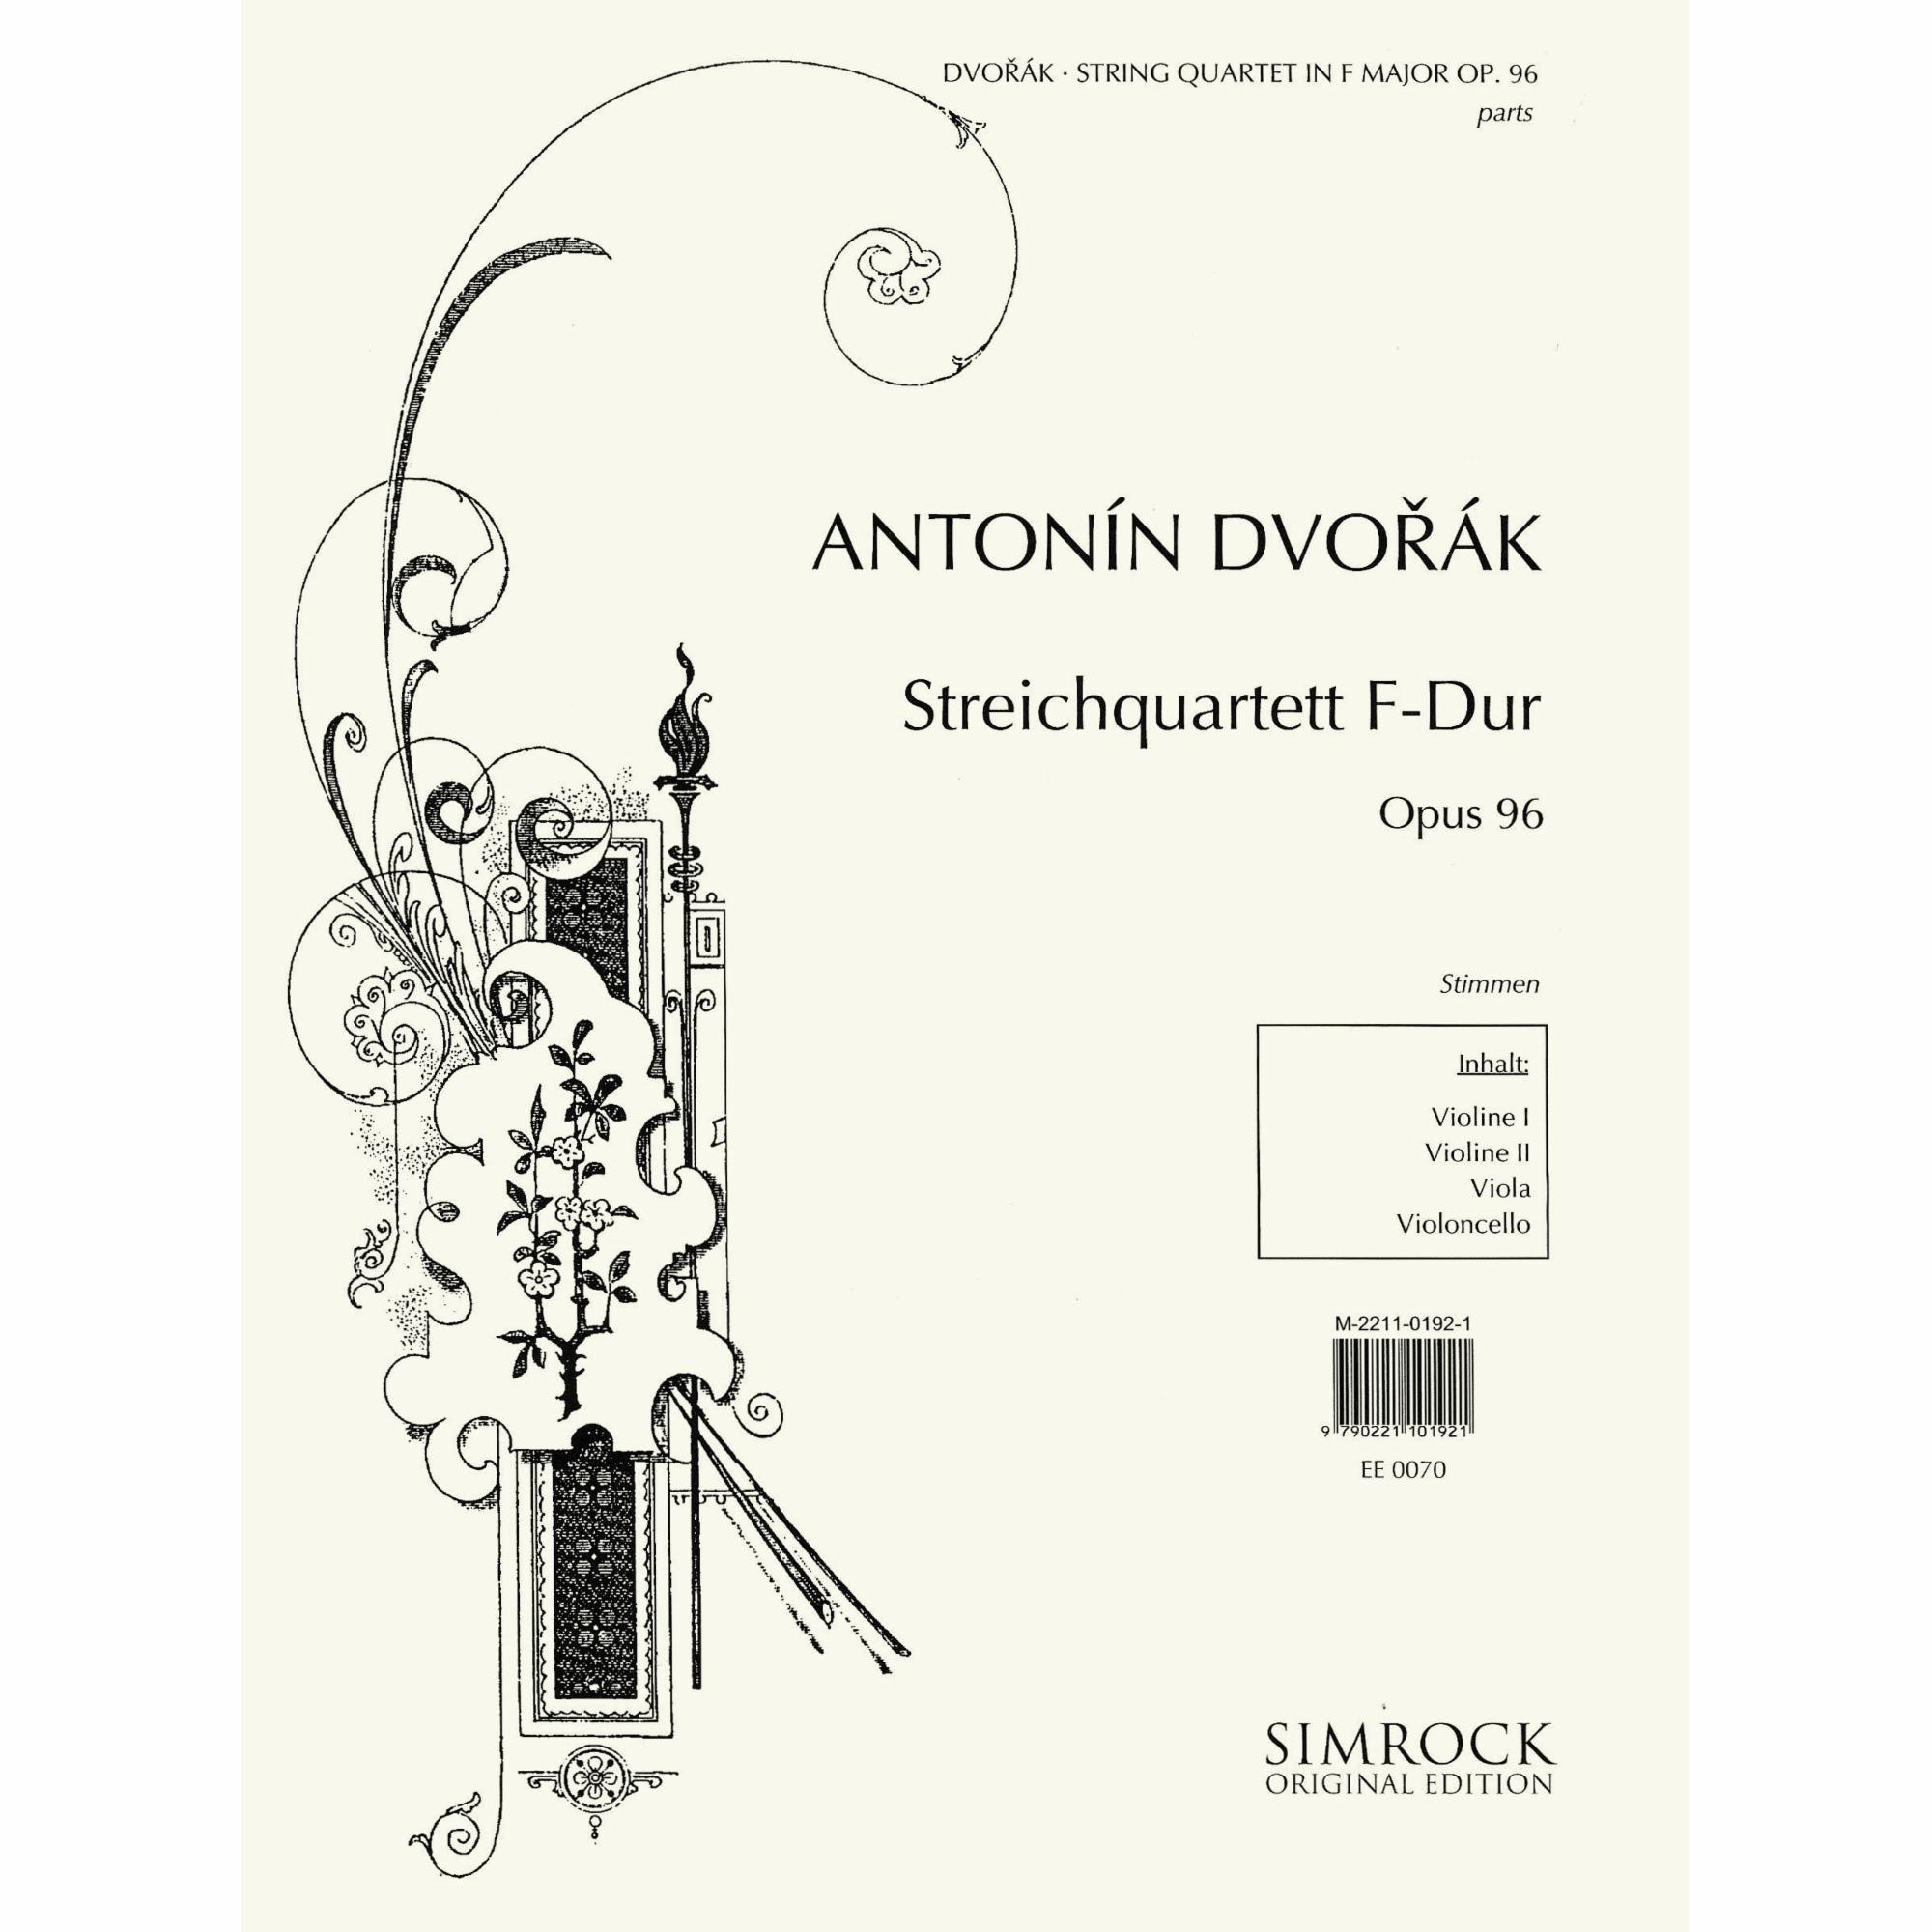 Dvorak -- String Quartet in F Major, Op. 96 (American)